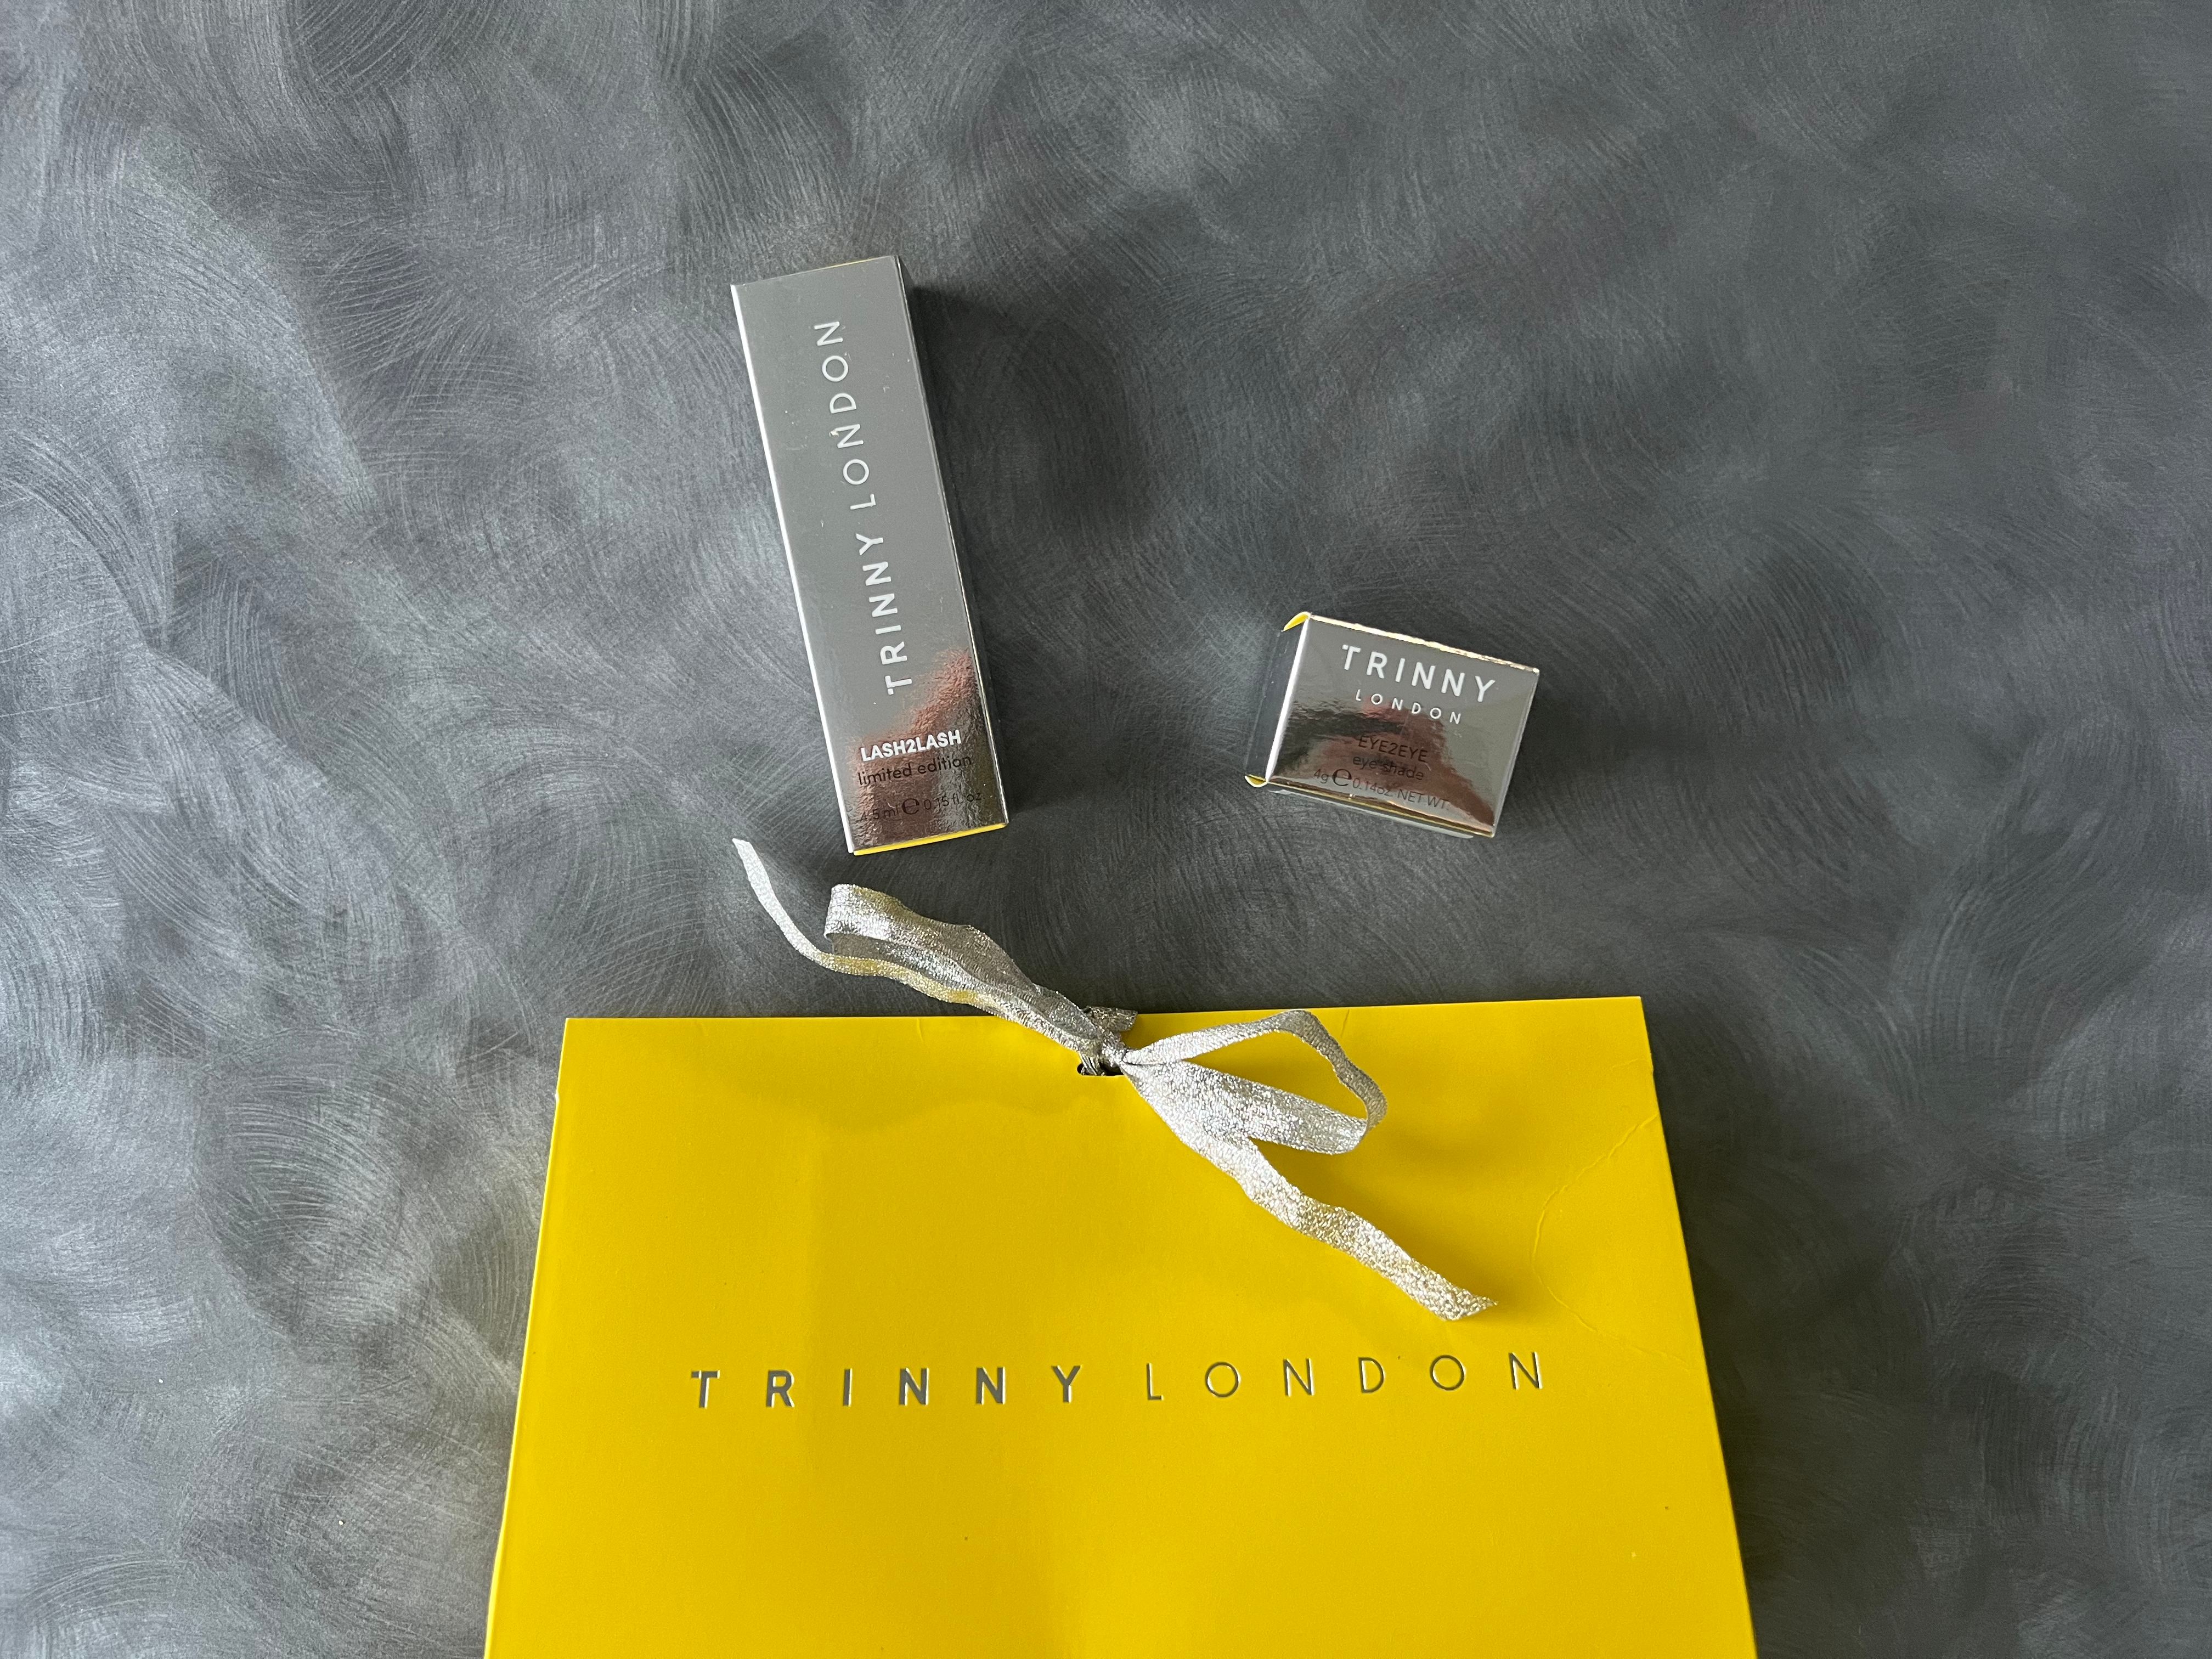 Trinny London bright-eyed Christmas gift set